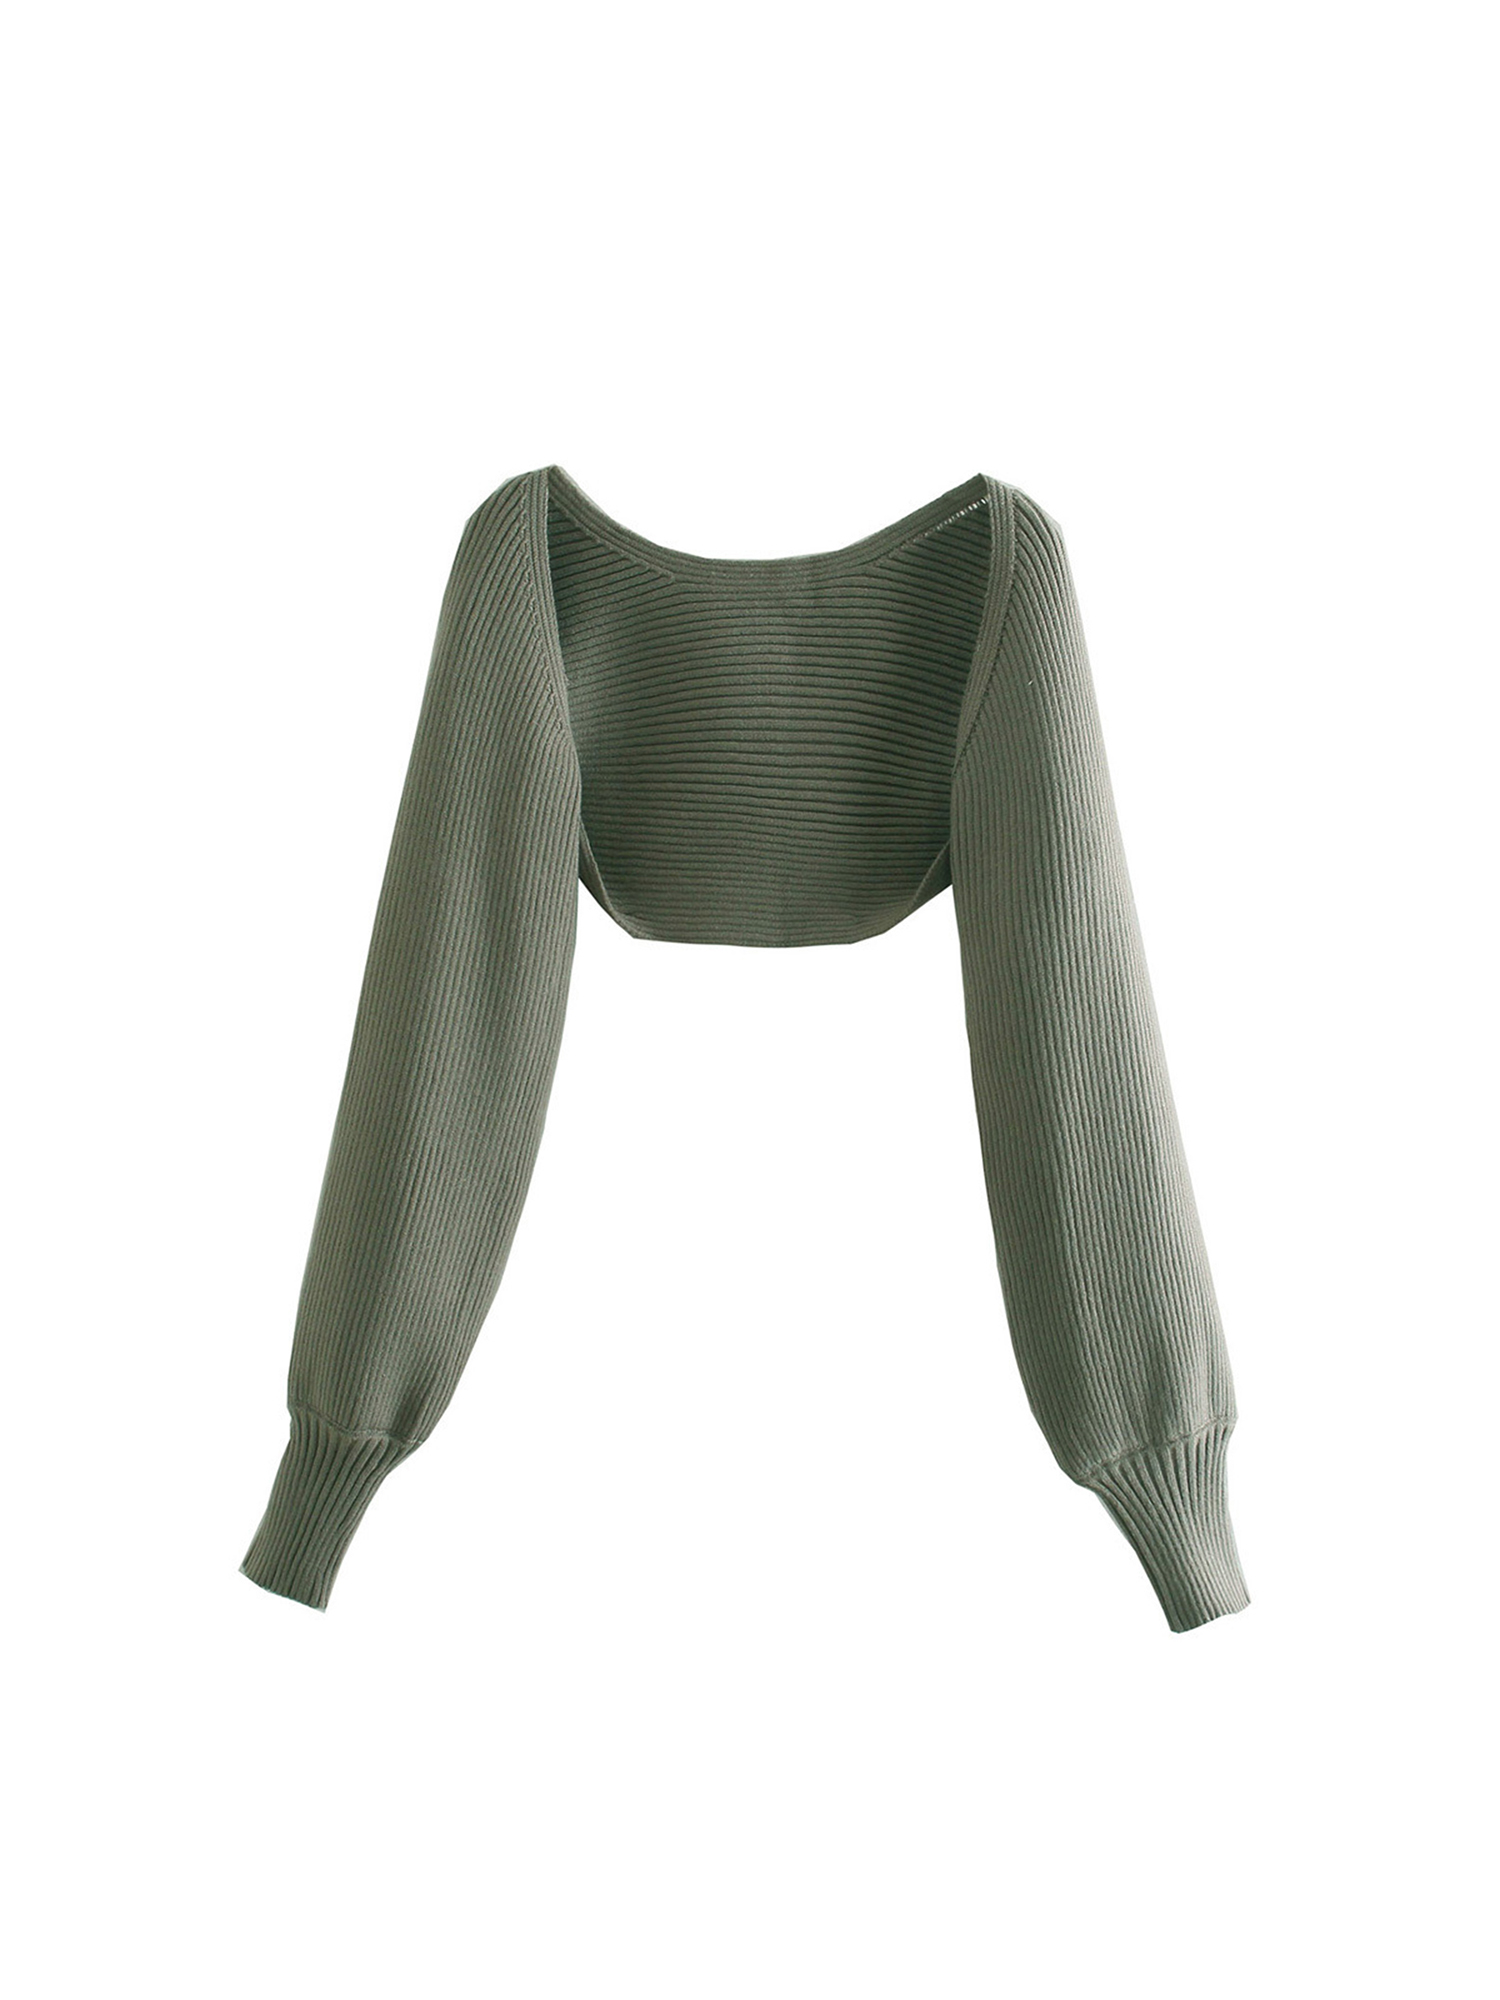 XIAXAIXU Women Arm Cover Off Shoulder Straight Collar Knit Sweater